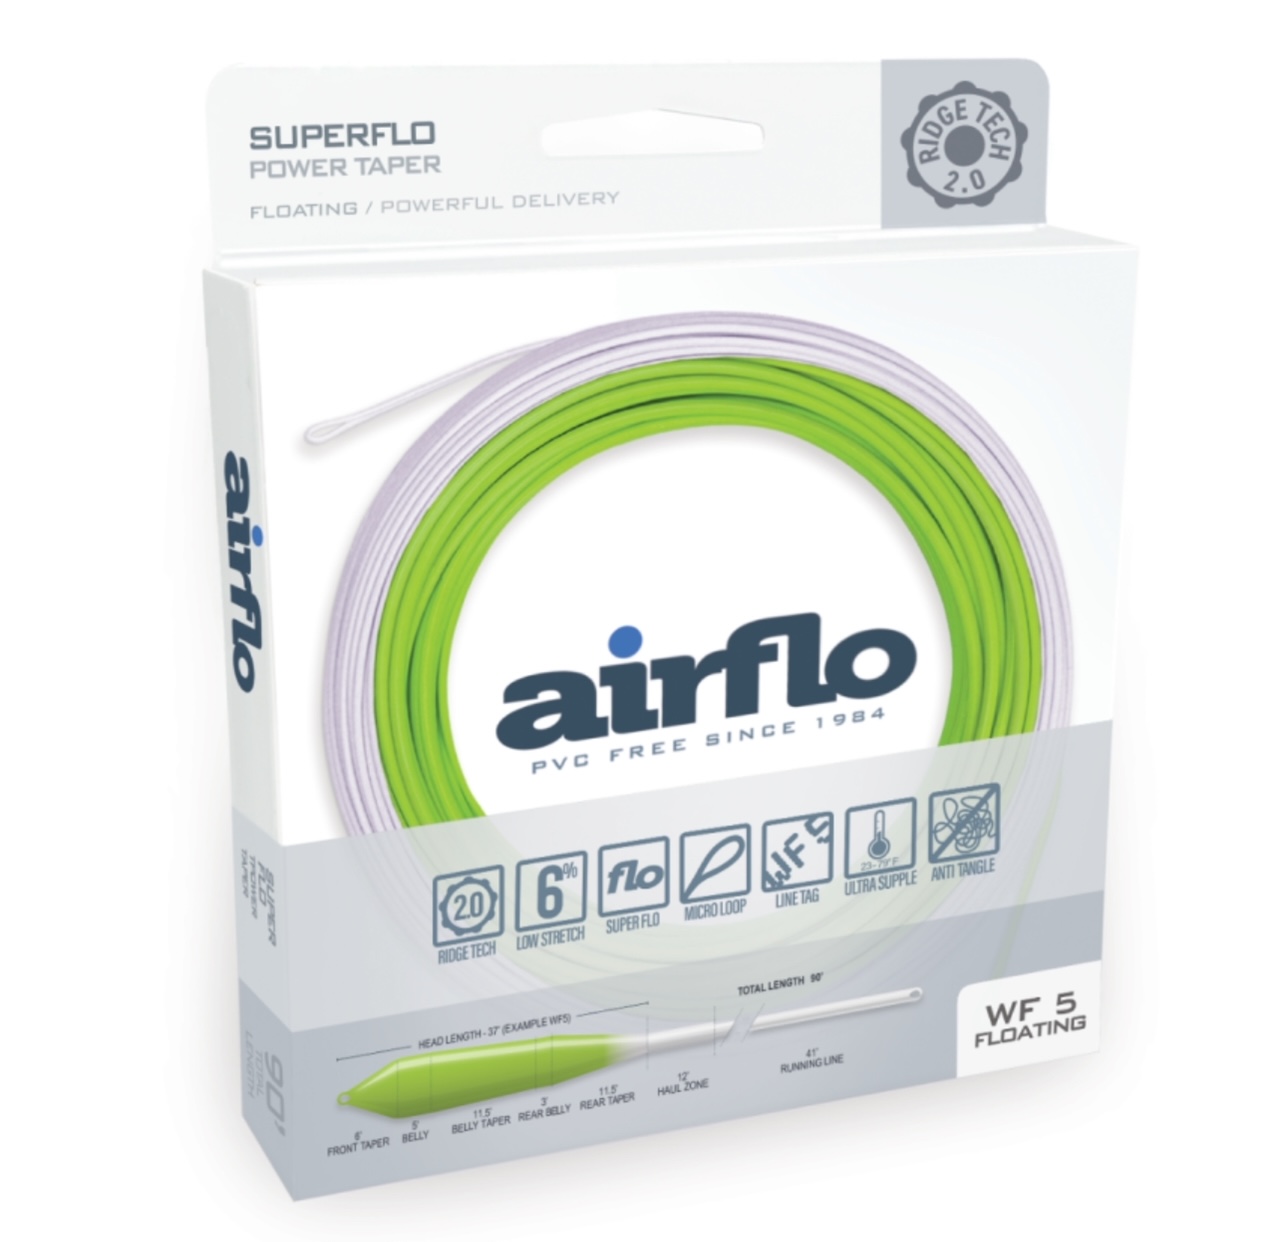 Airflo Superflo Ridge 2.0 Power Taper - WF8F - Chartreuse/White